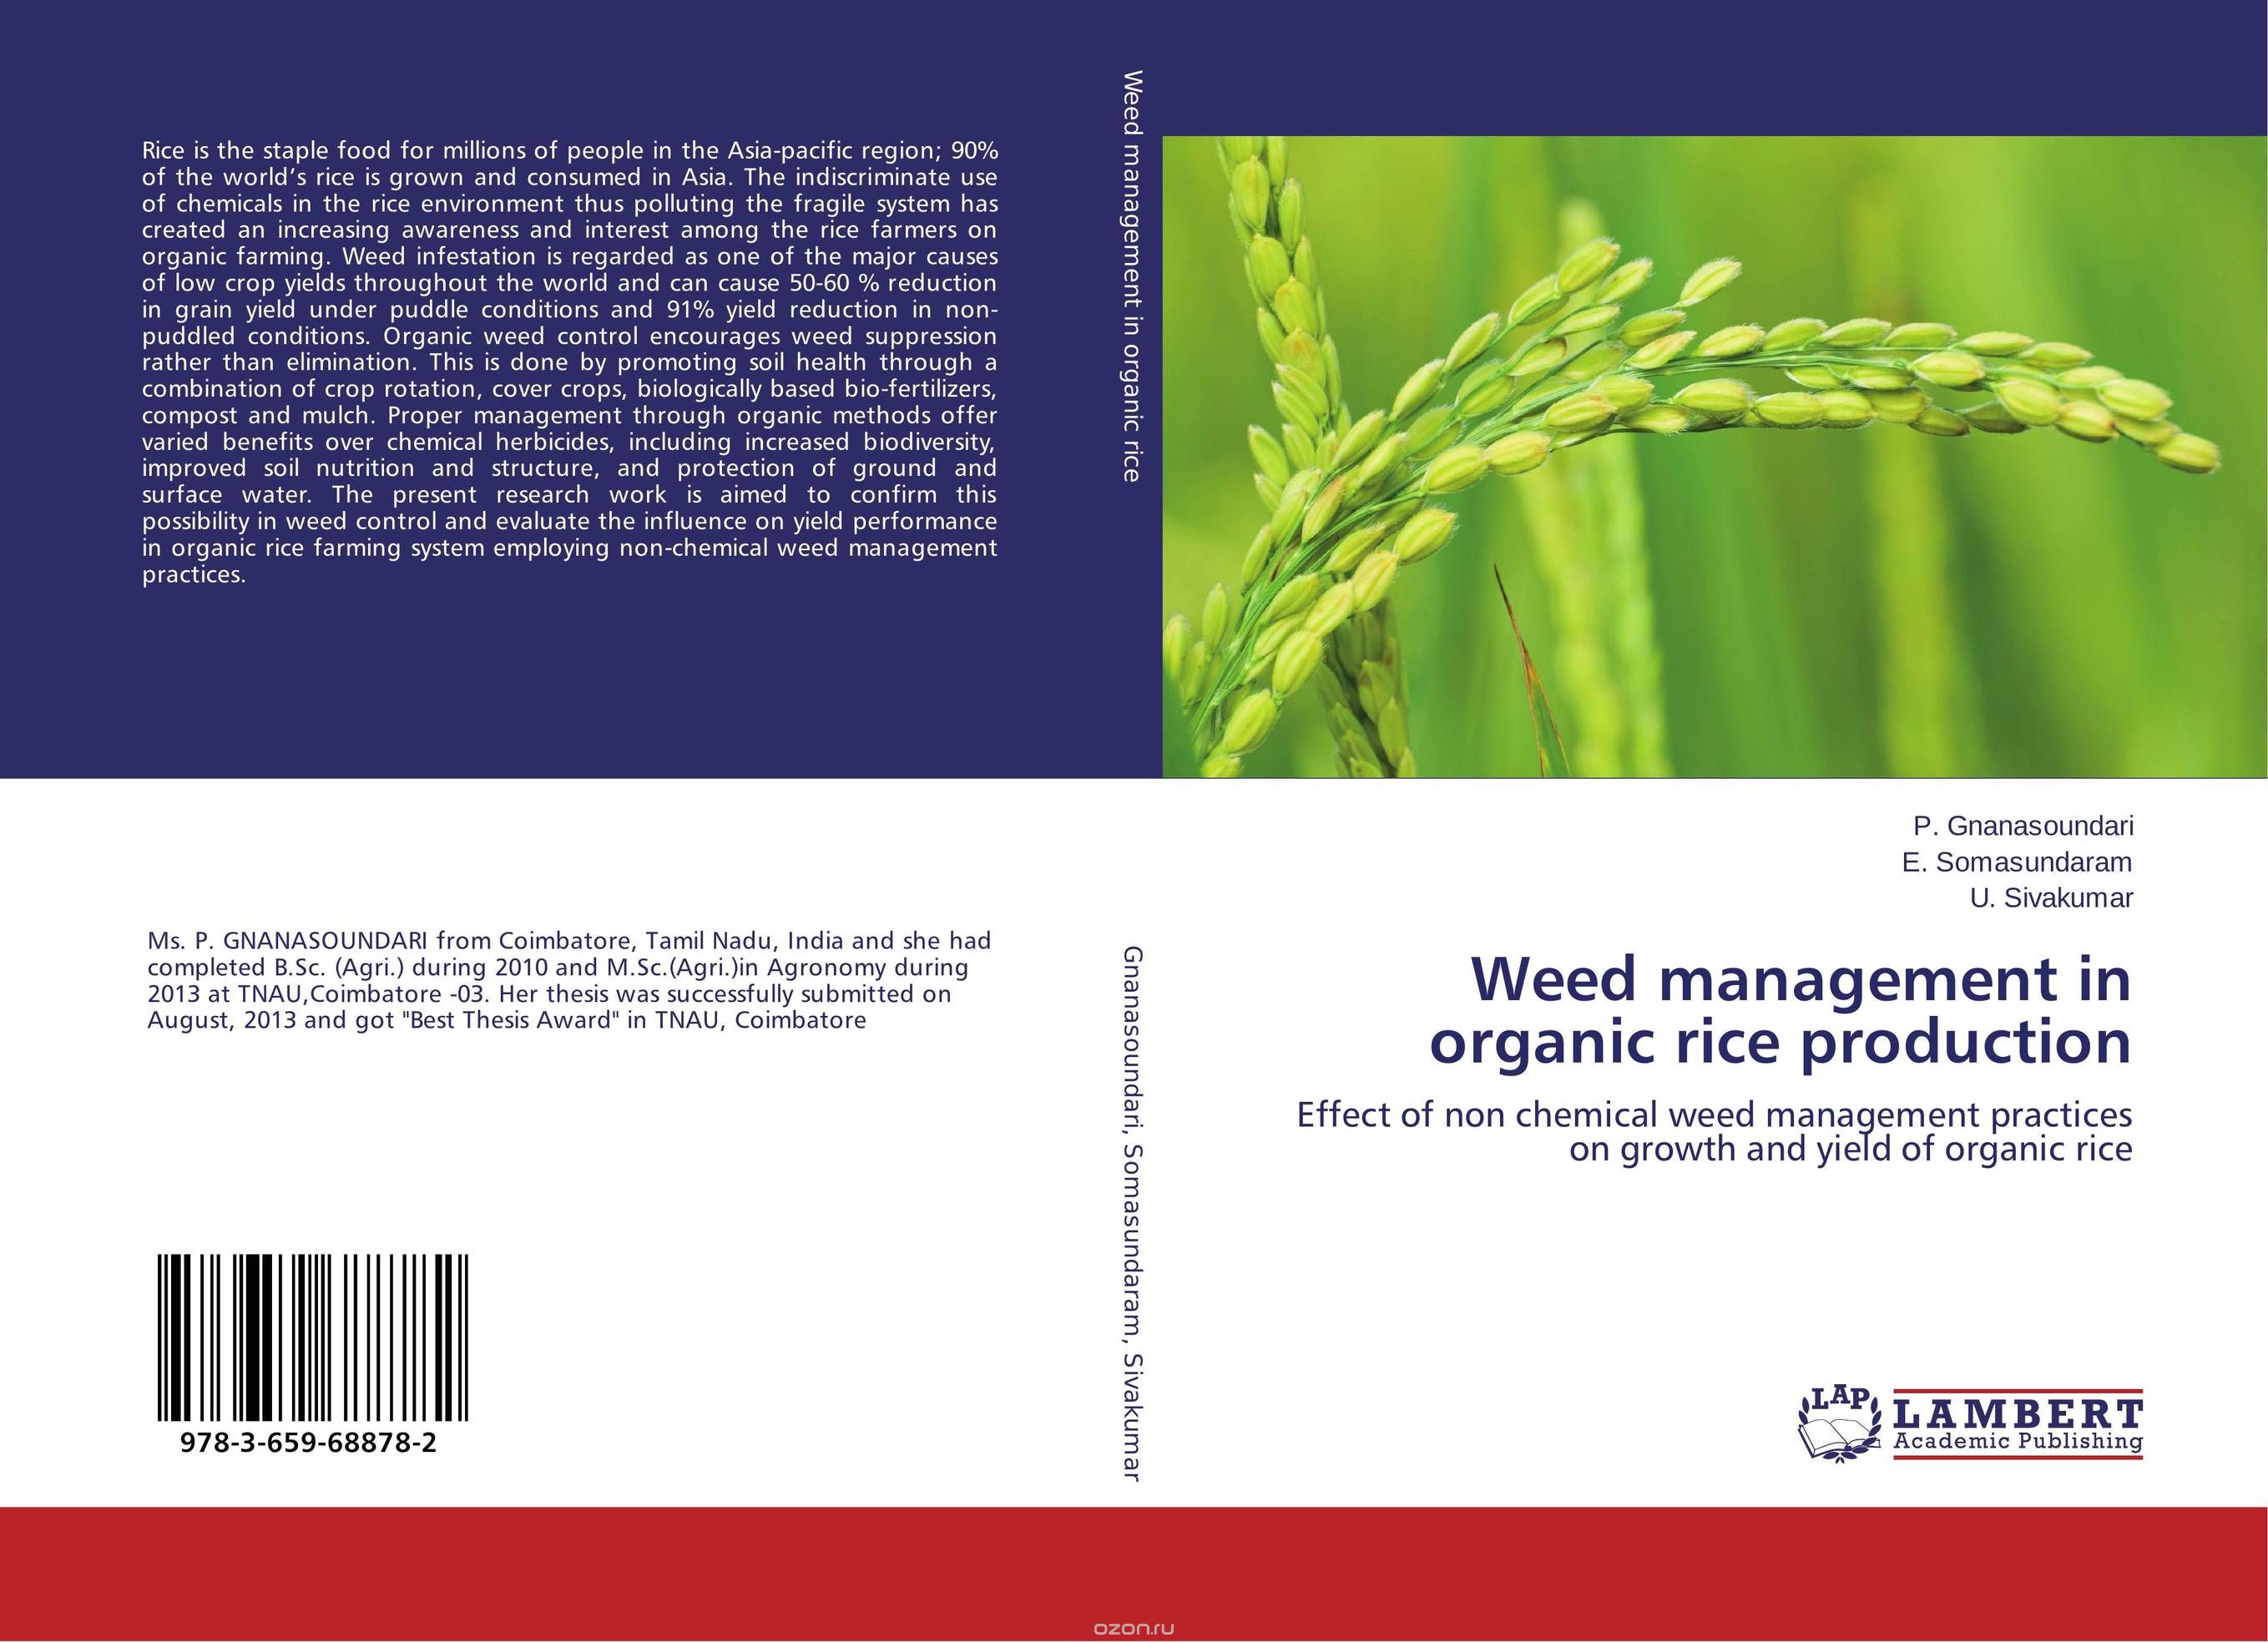 Скачать книгу "Weed management in organic rice production"